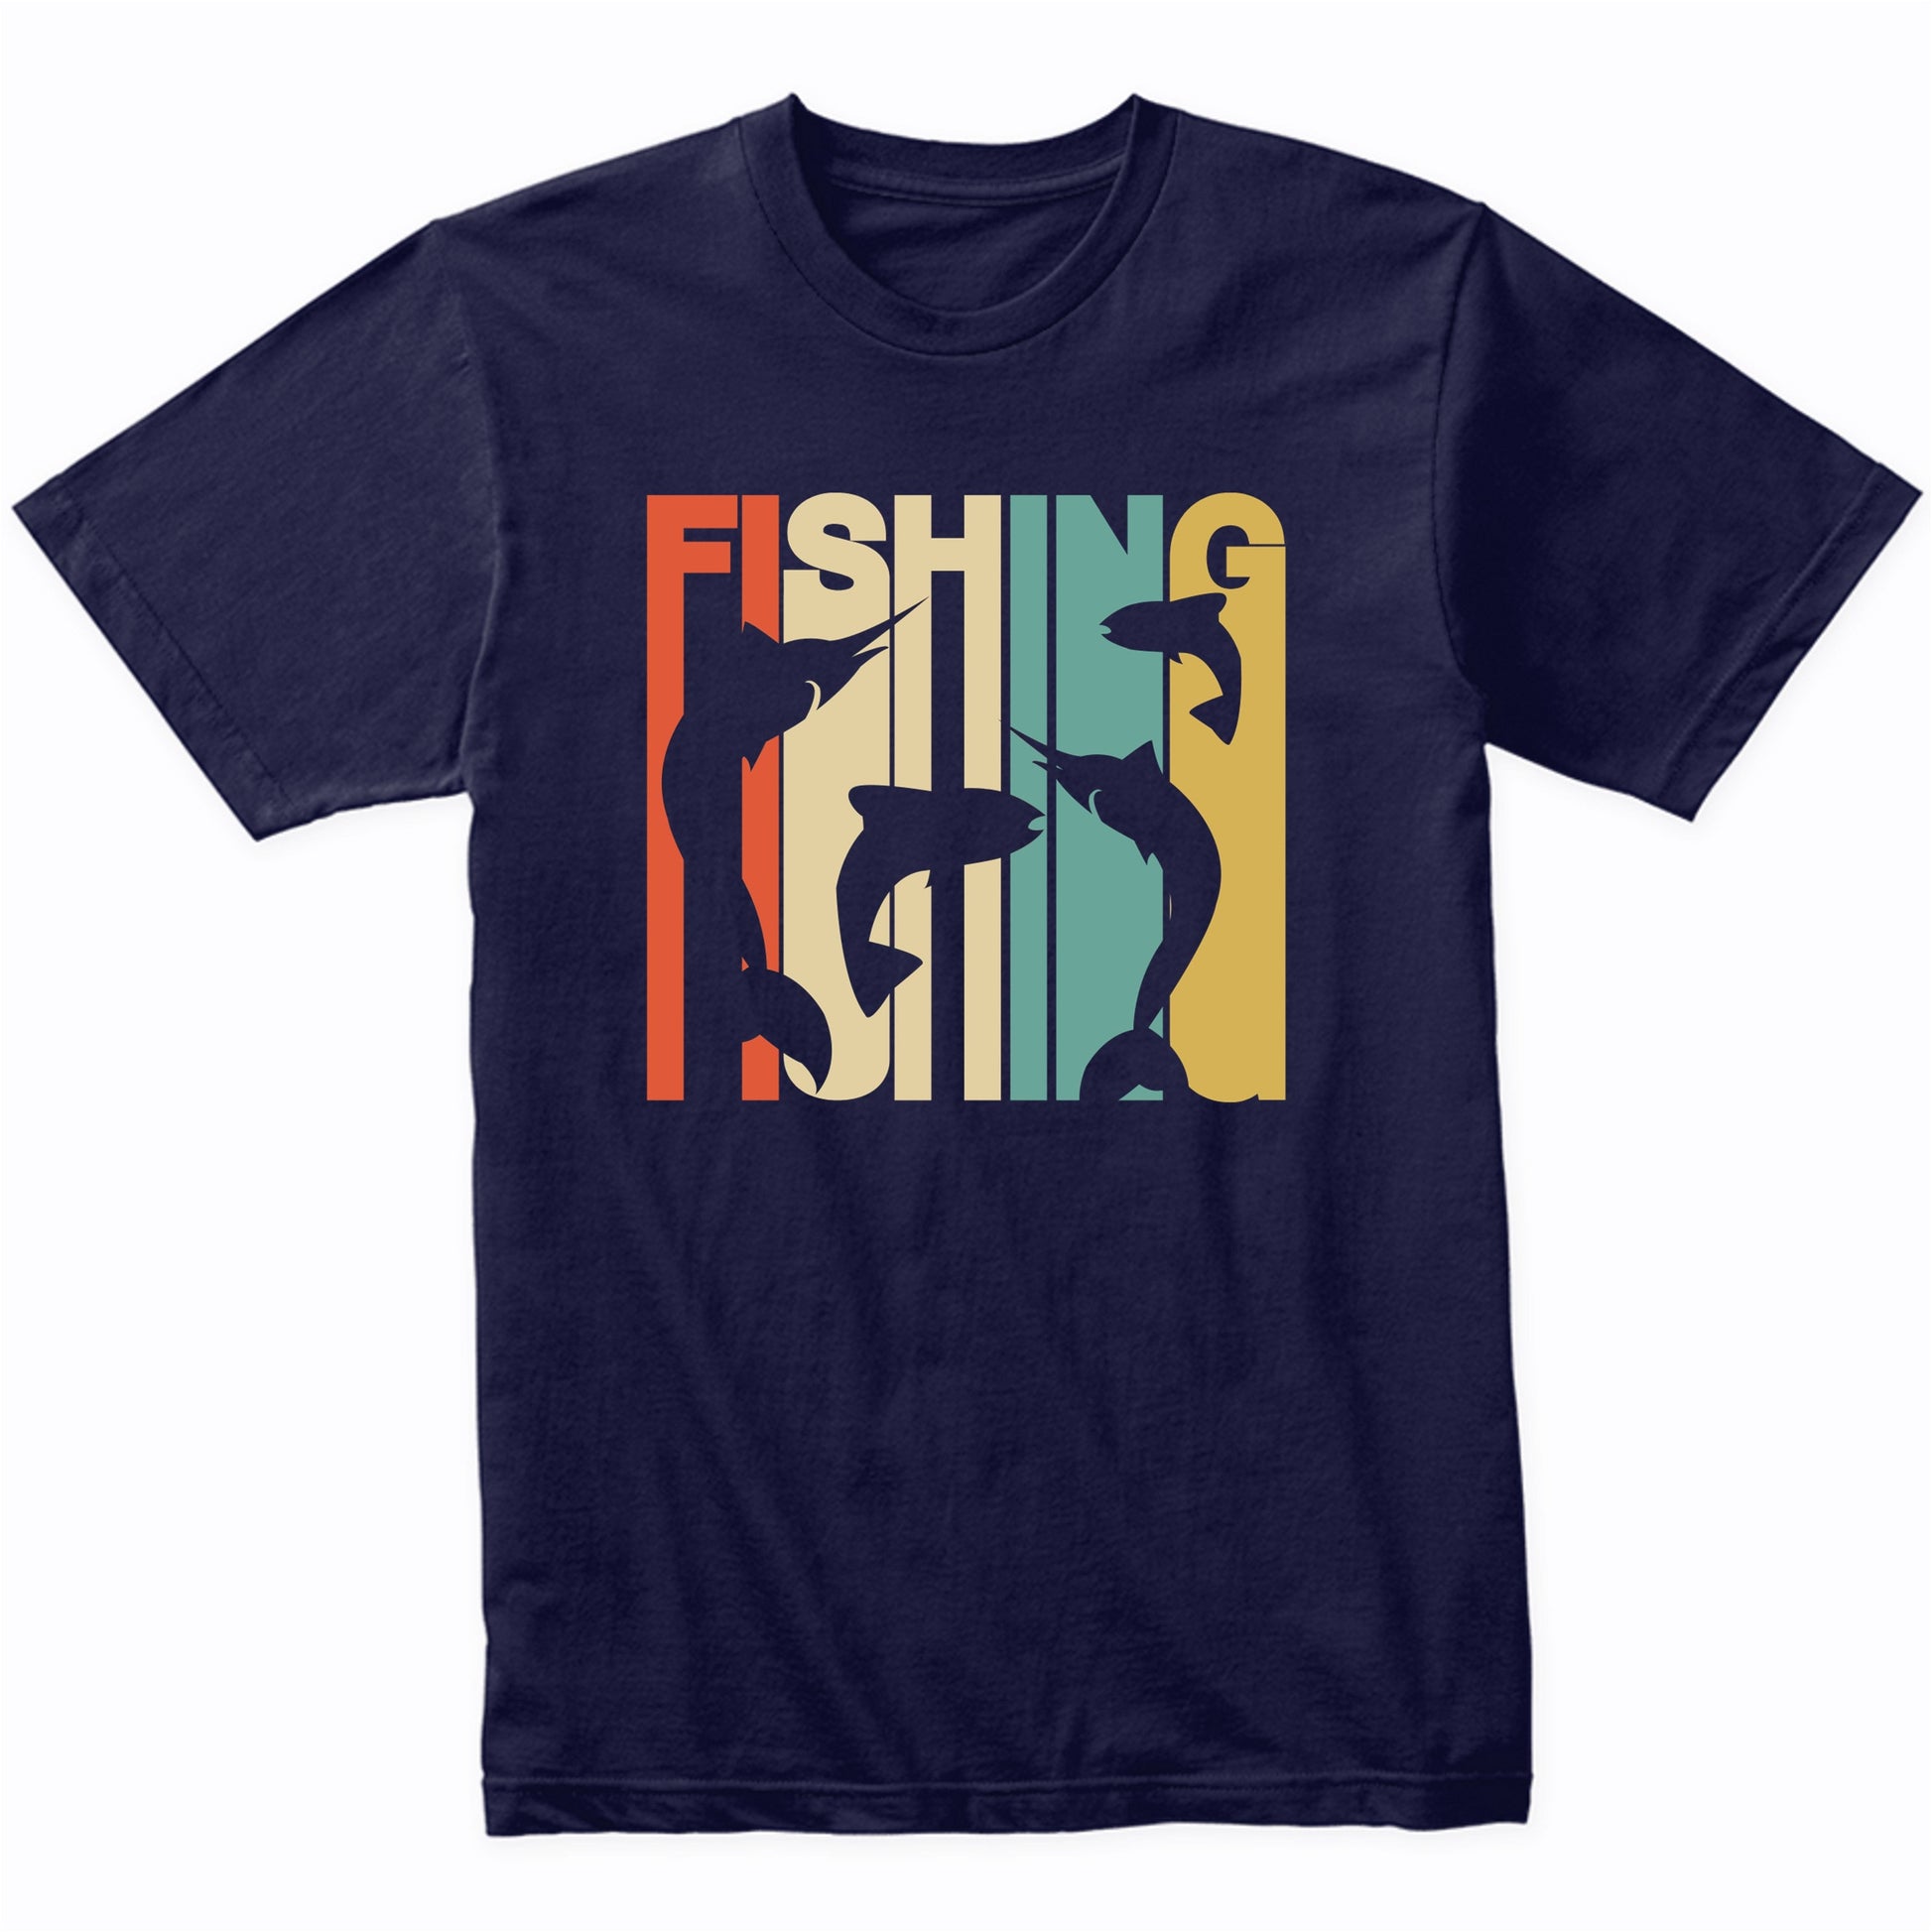 Vintage 1970's Style Fishing Fish Silhouettes Retro T-Shirt